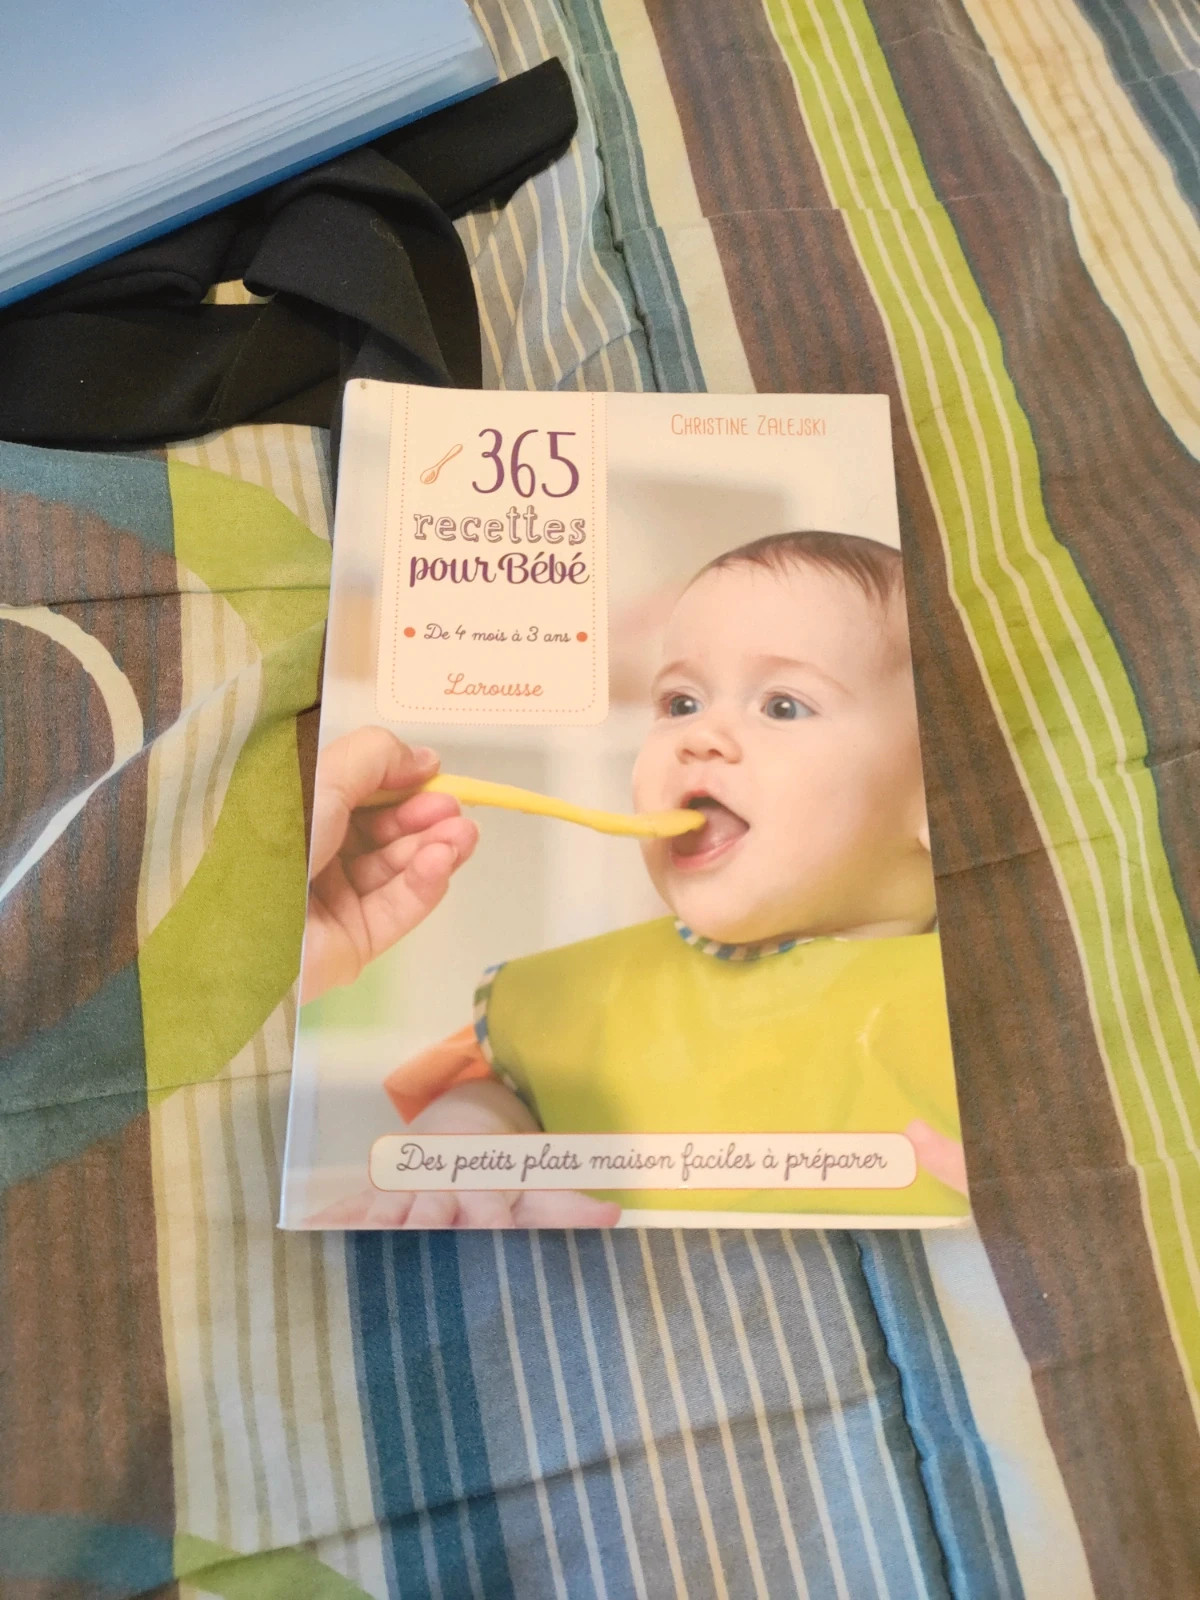 365 recettes pour bébé - Zalejski Christine